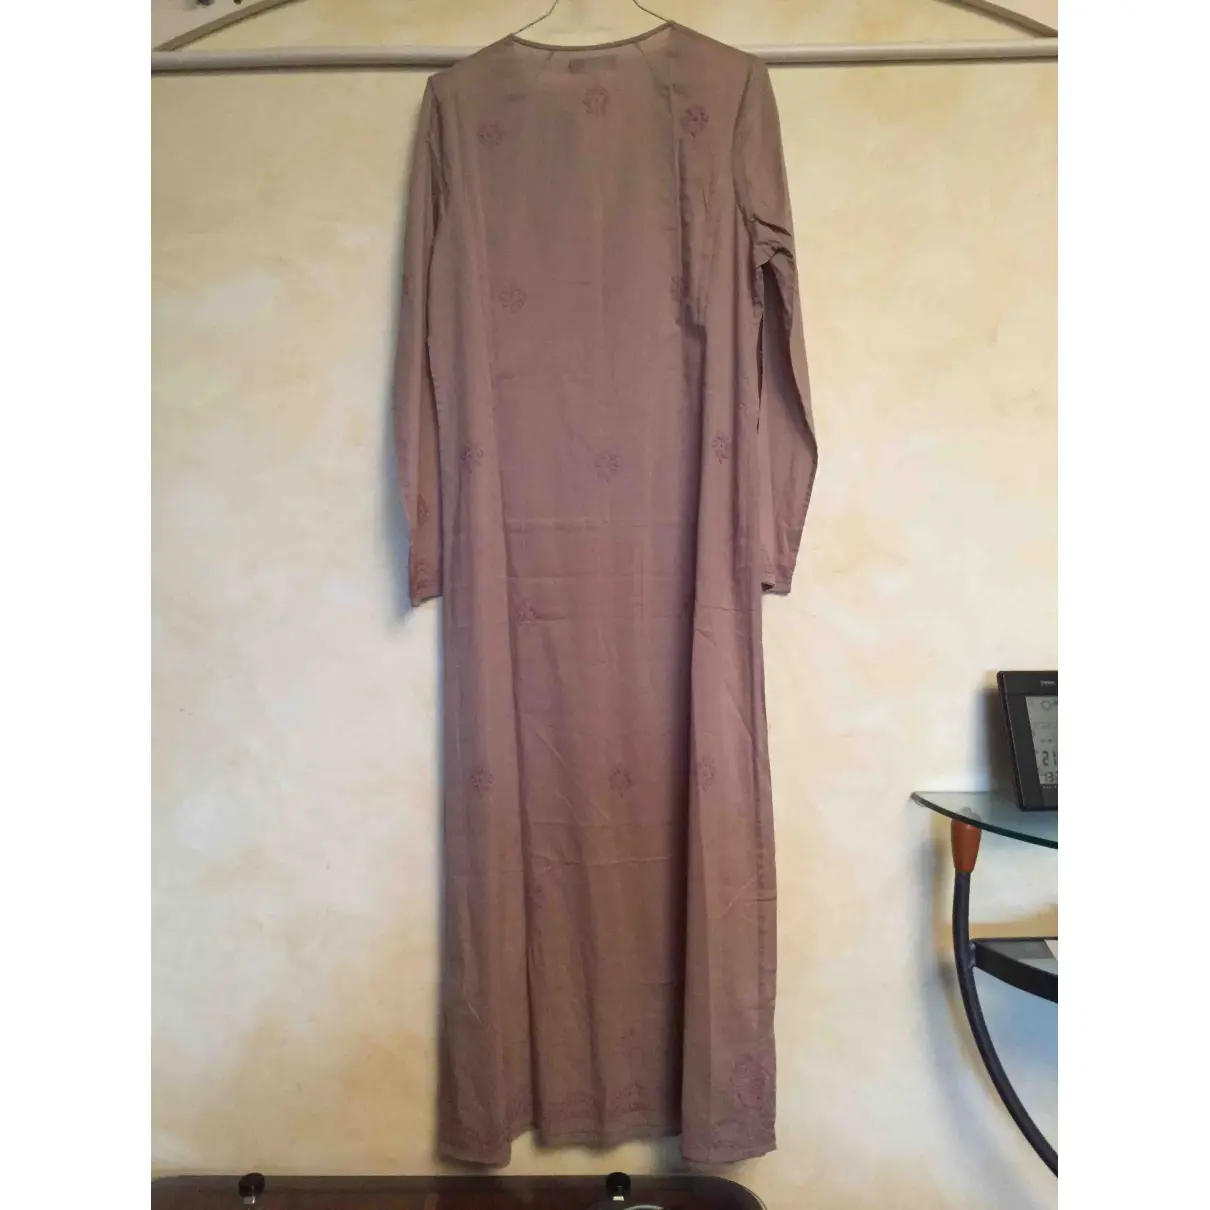 Antik Batik Maxi dress for sale